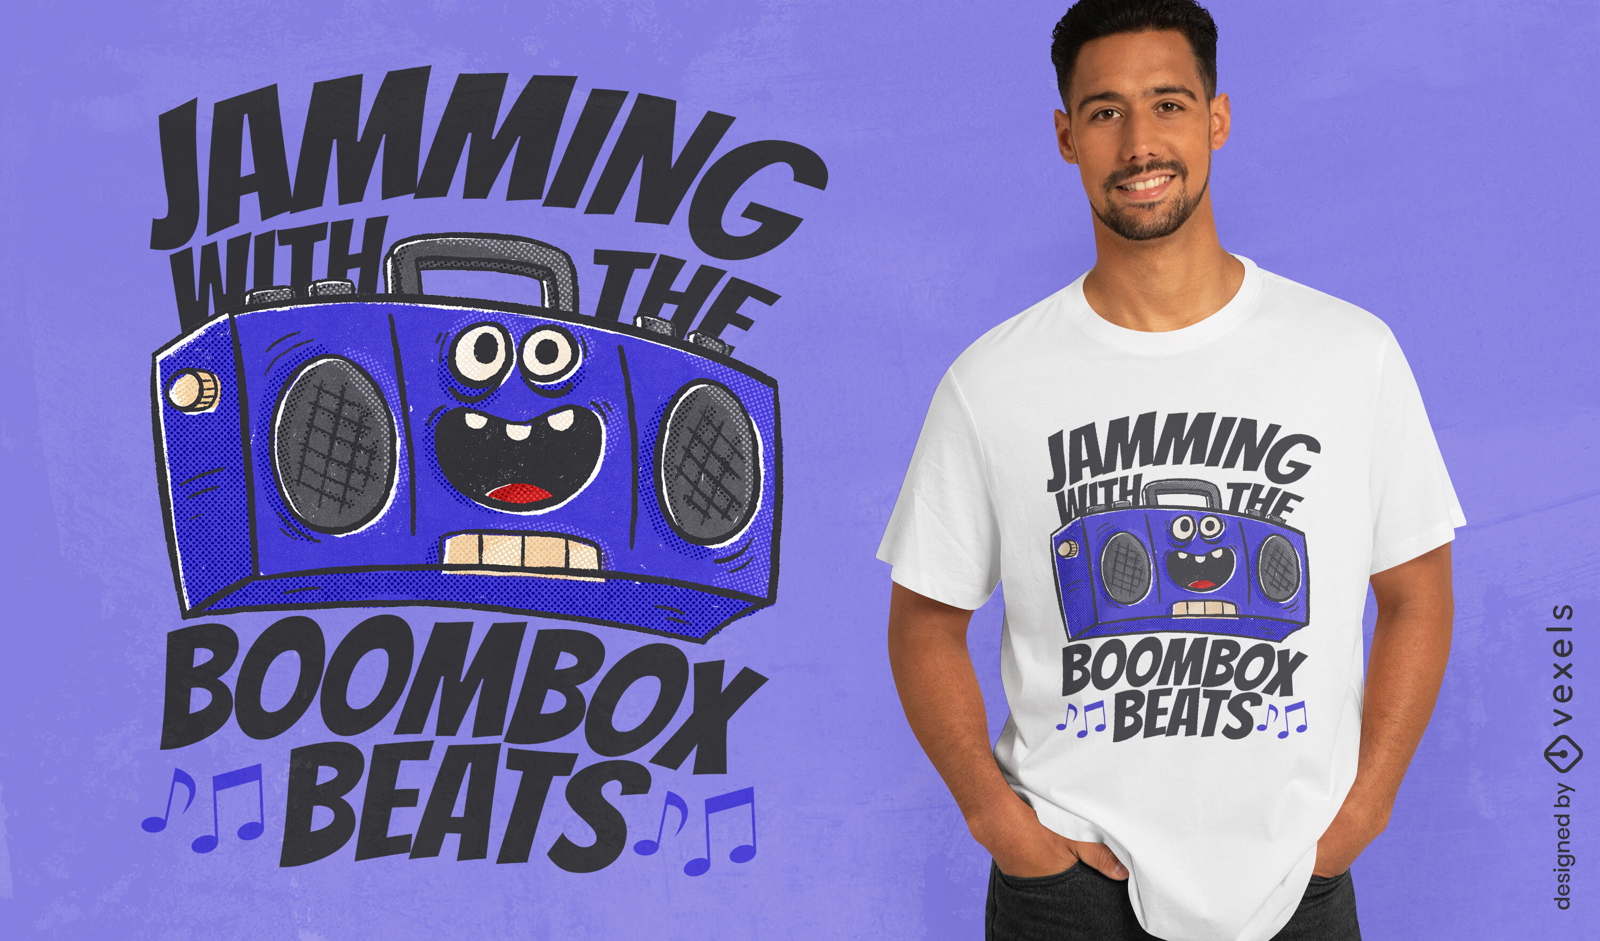 Dise?o de camiseta retro boombox beats.